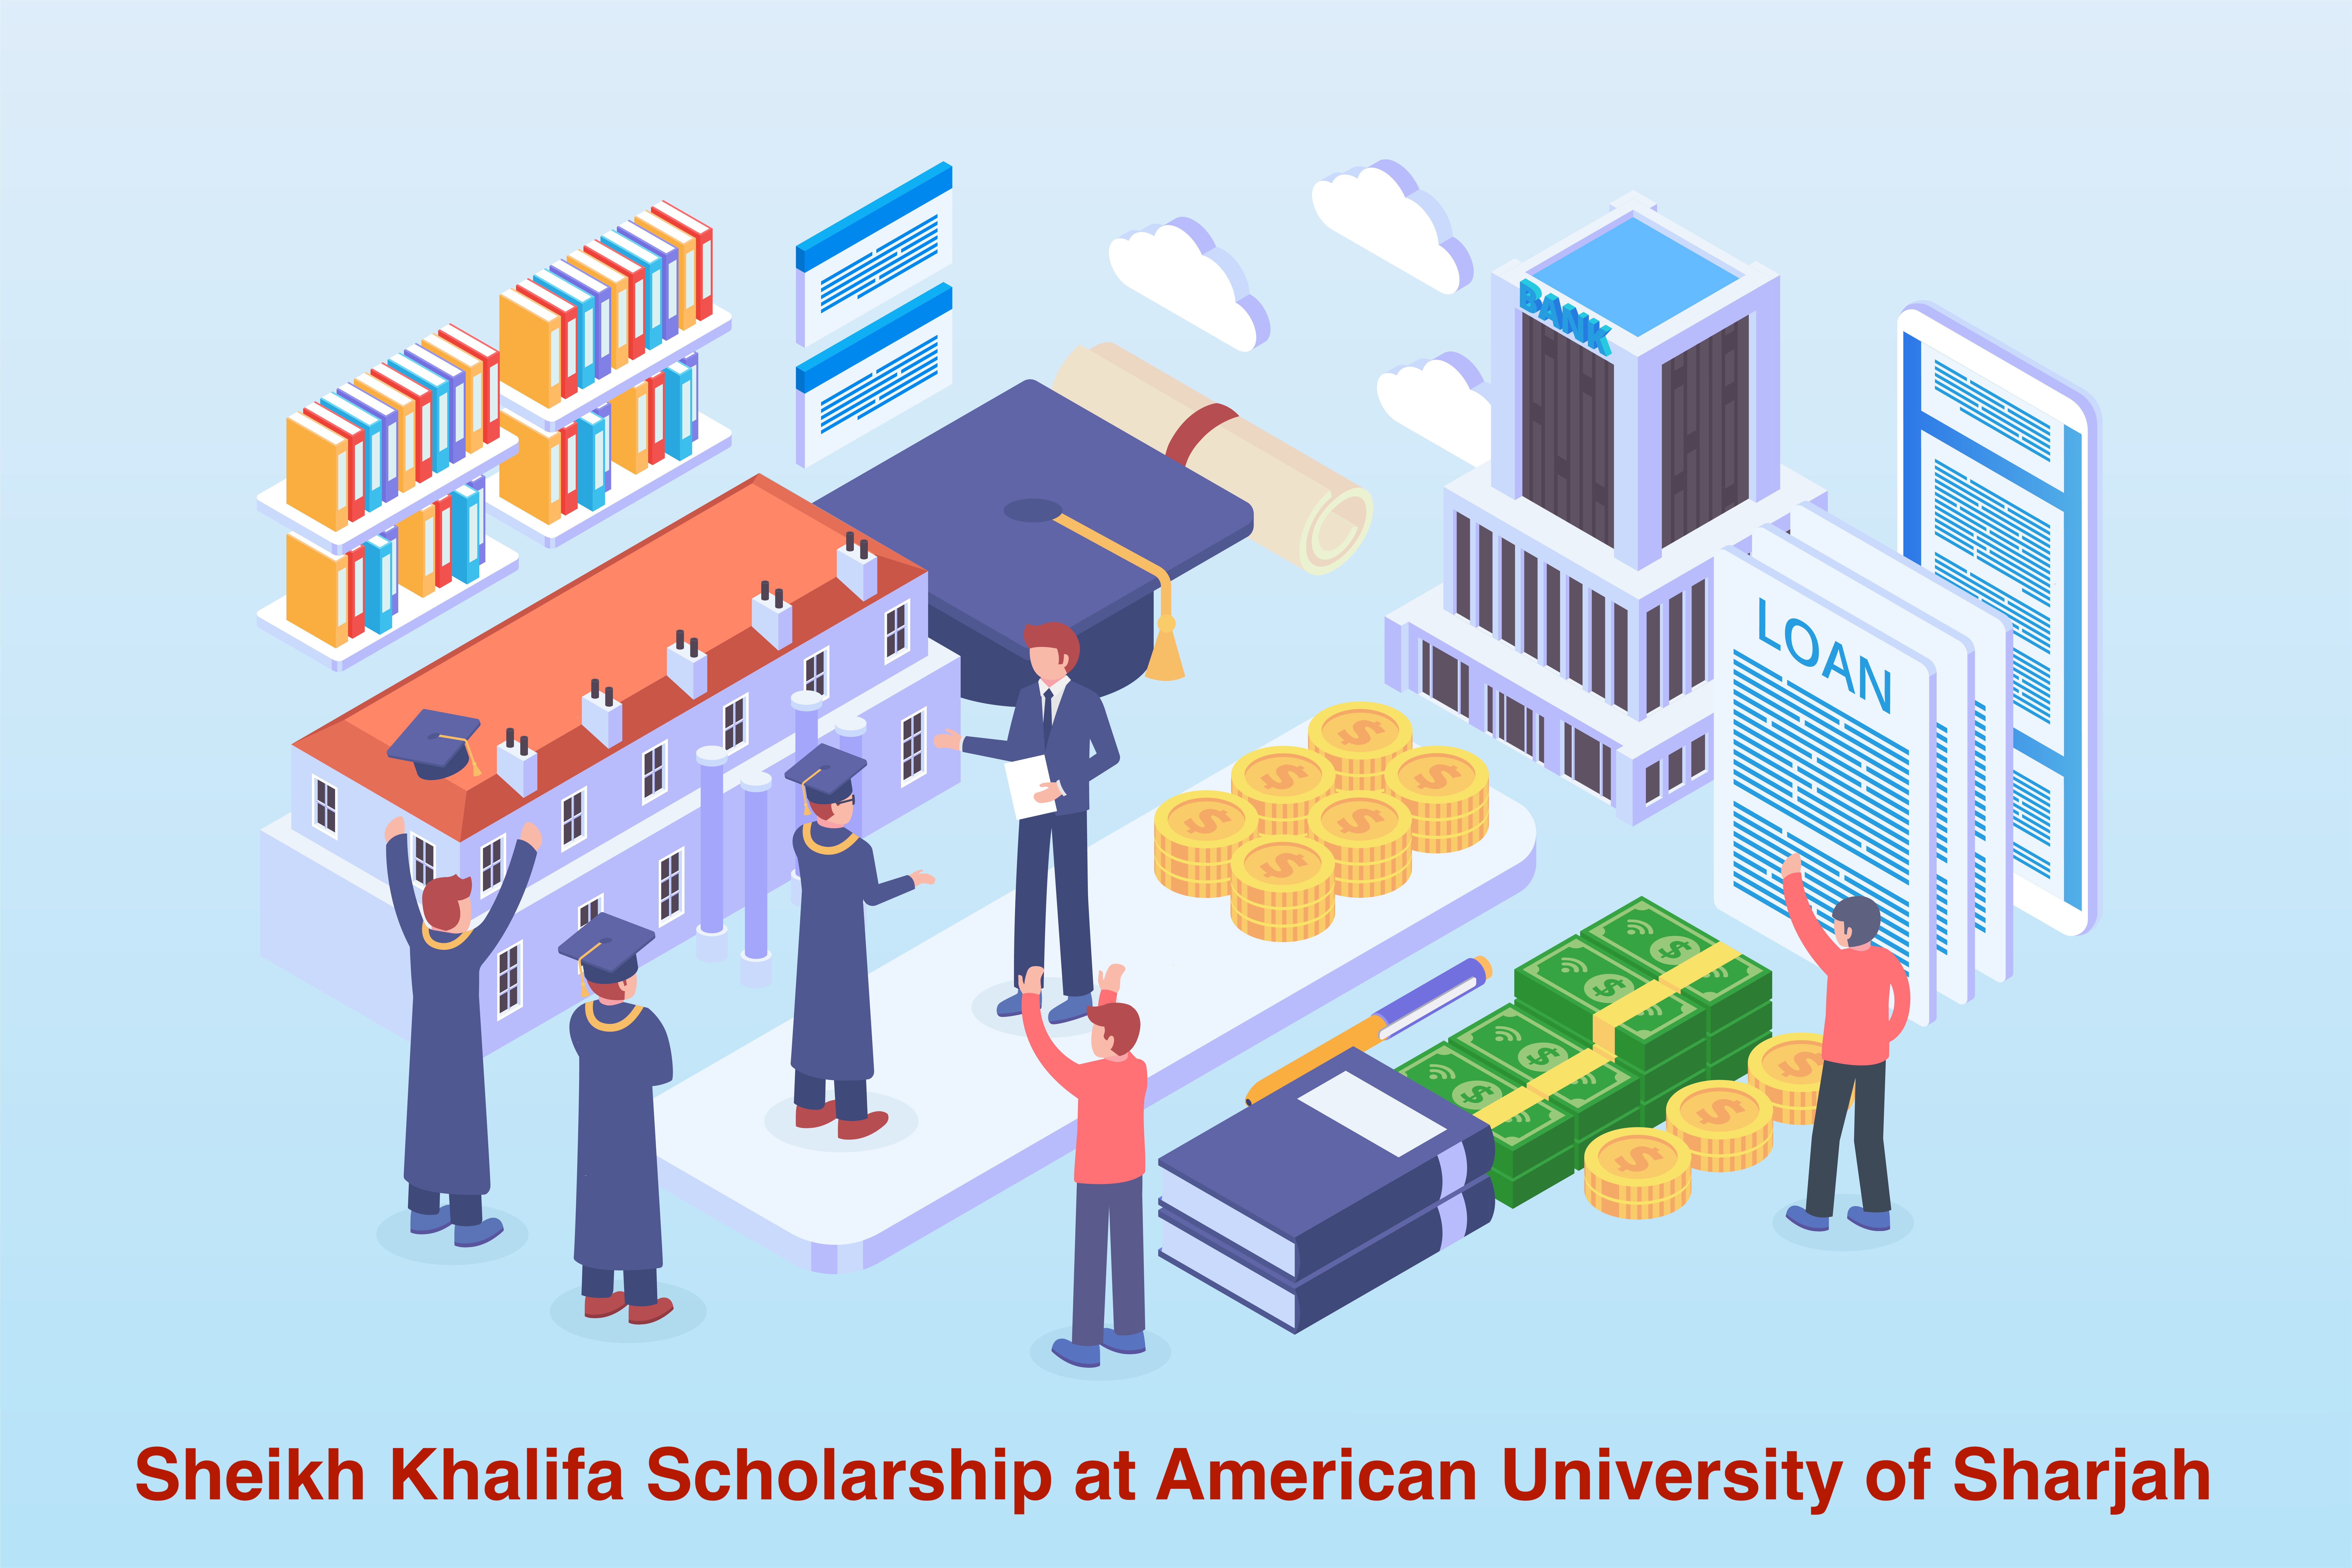 Sheikh Khalifa Scholarship at American University of Sharjah, awarded to 4 brilliant students